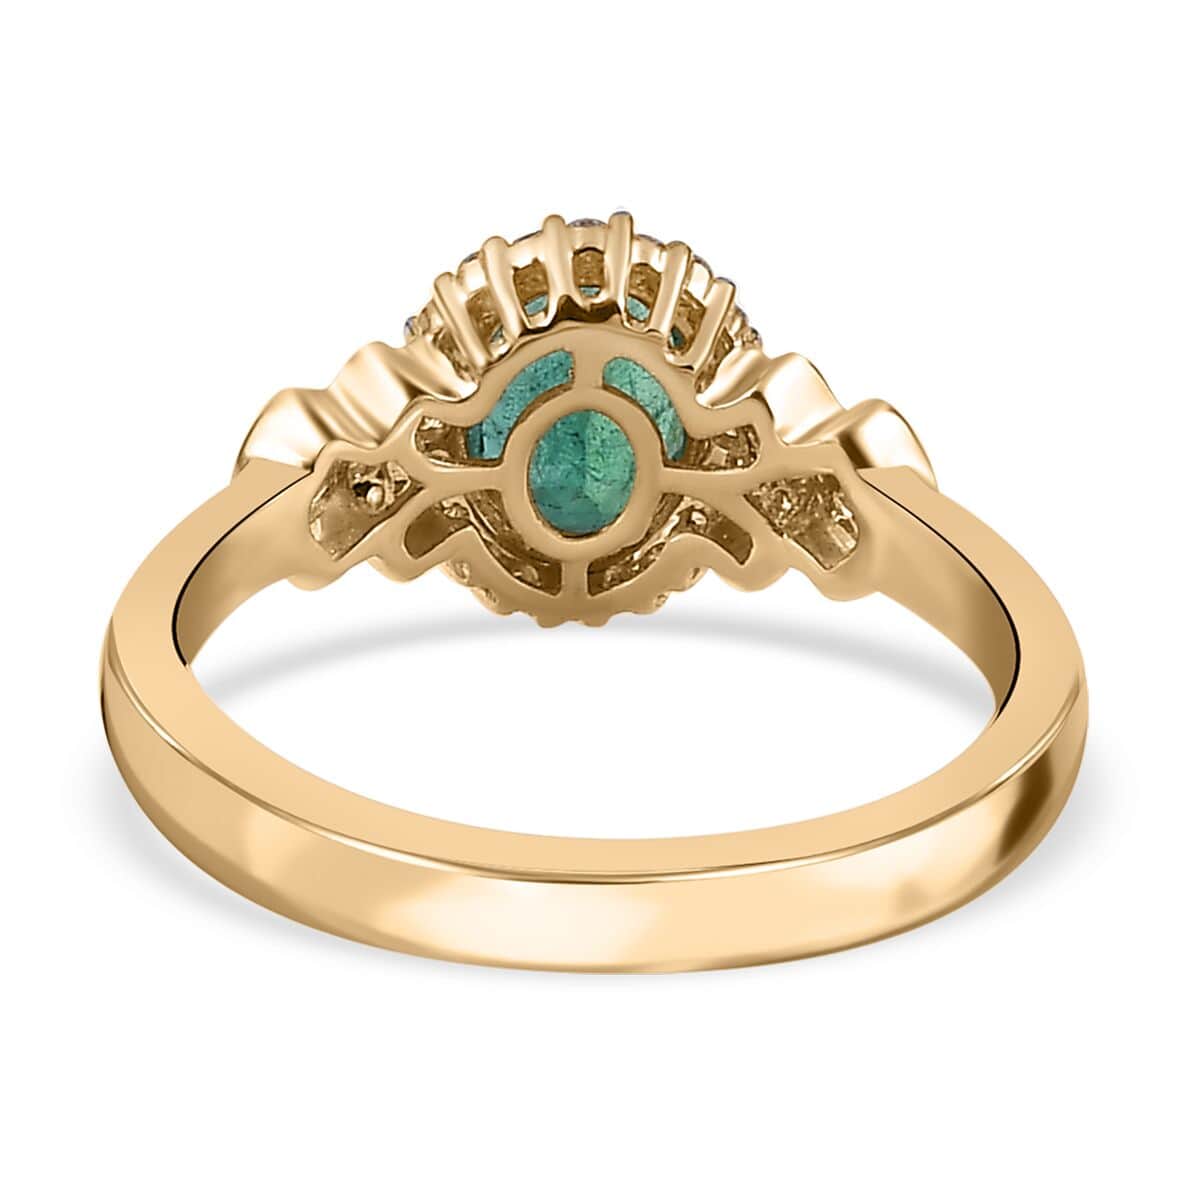 Luxoro 10K Yellow Gold Premium Kagem Zambian Emerald and G-H I2 Diamond Halo Ring (Size 7.0) 1.35 ctw image number 4